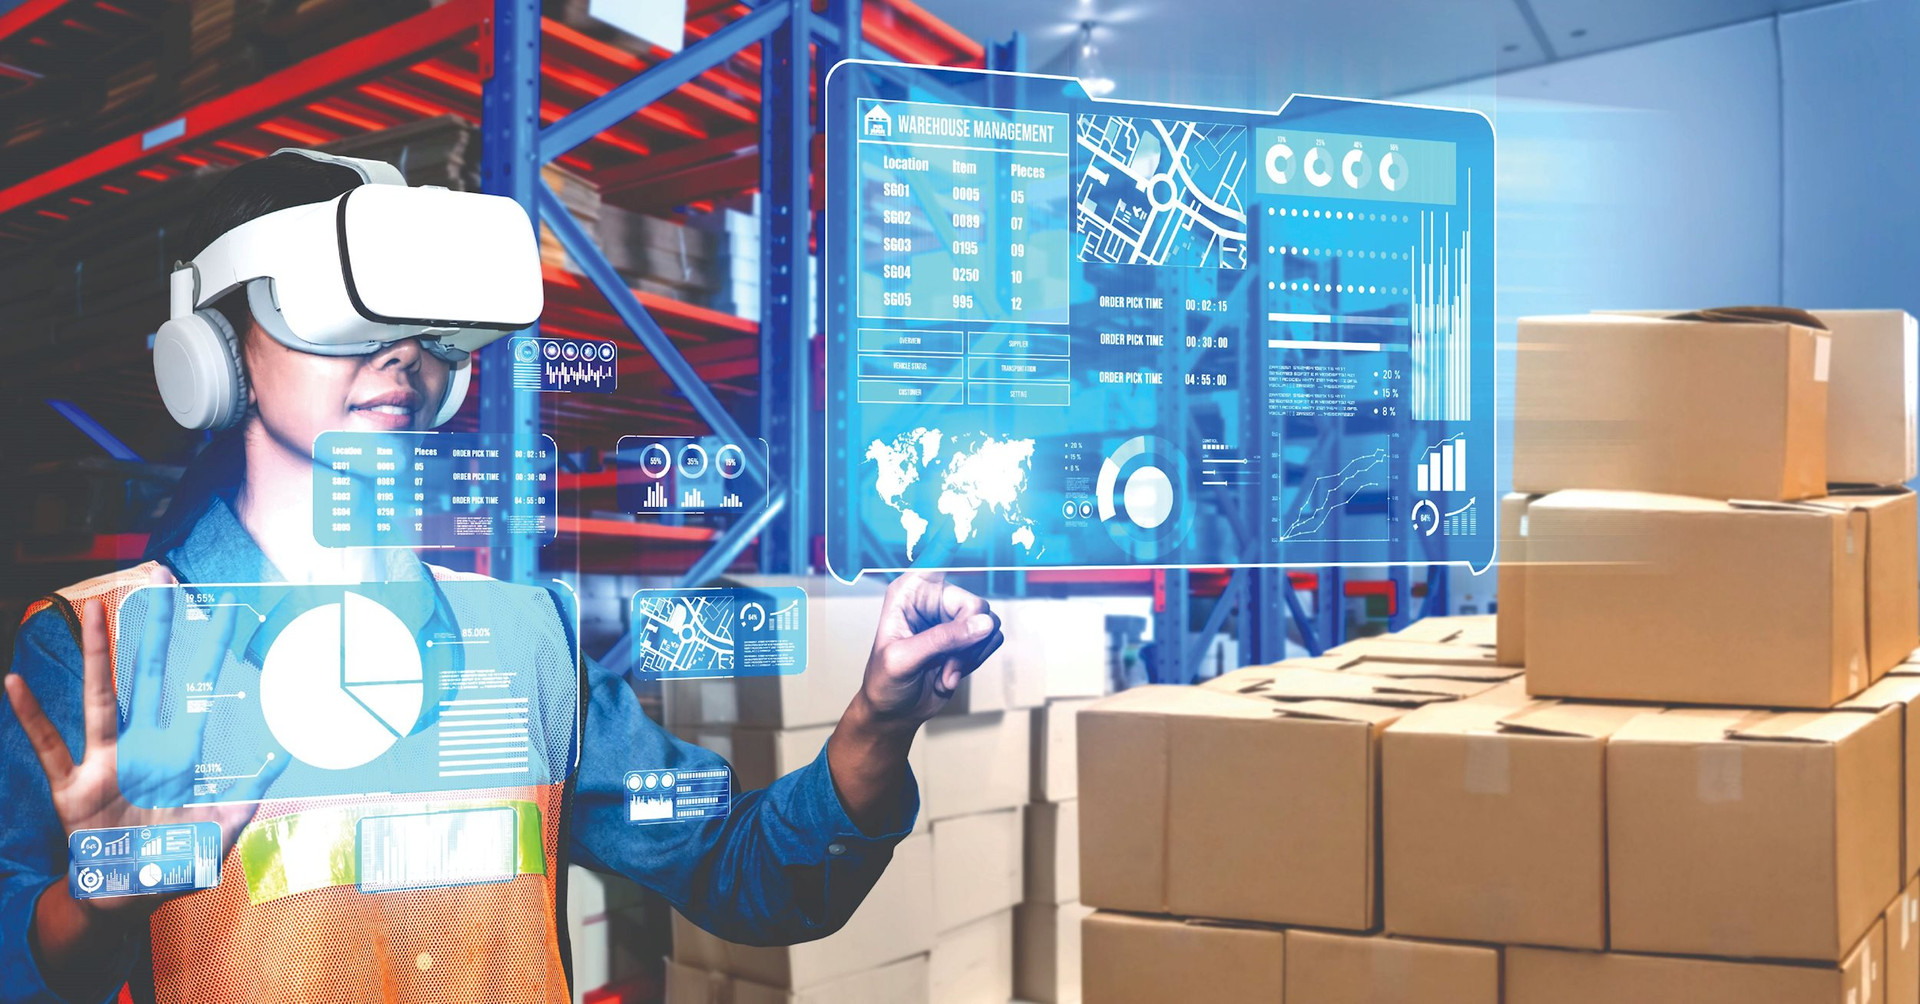 future-virtual-reality-technology-innovative-vr-warehouse-management-compressed.jpeg